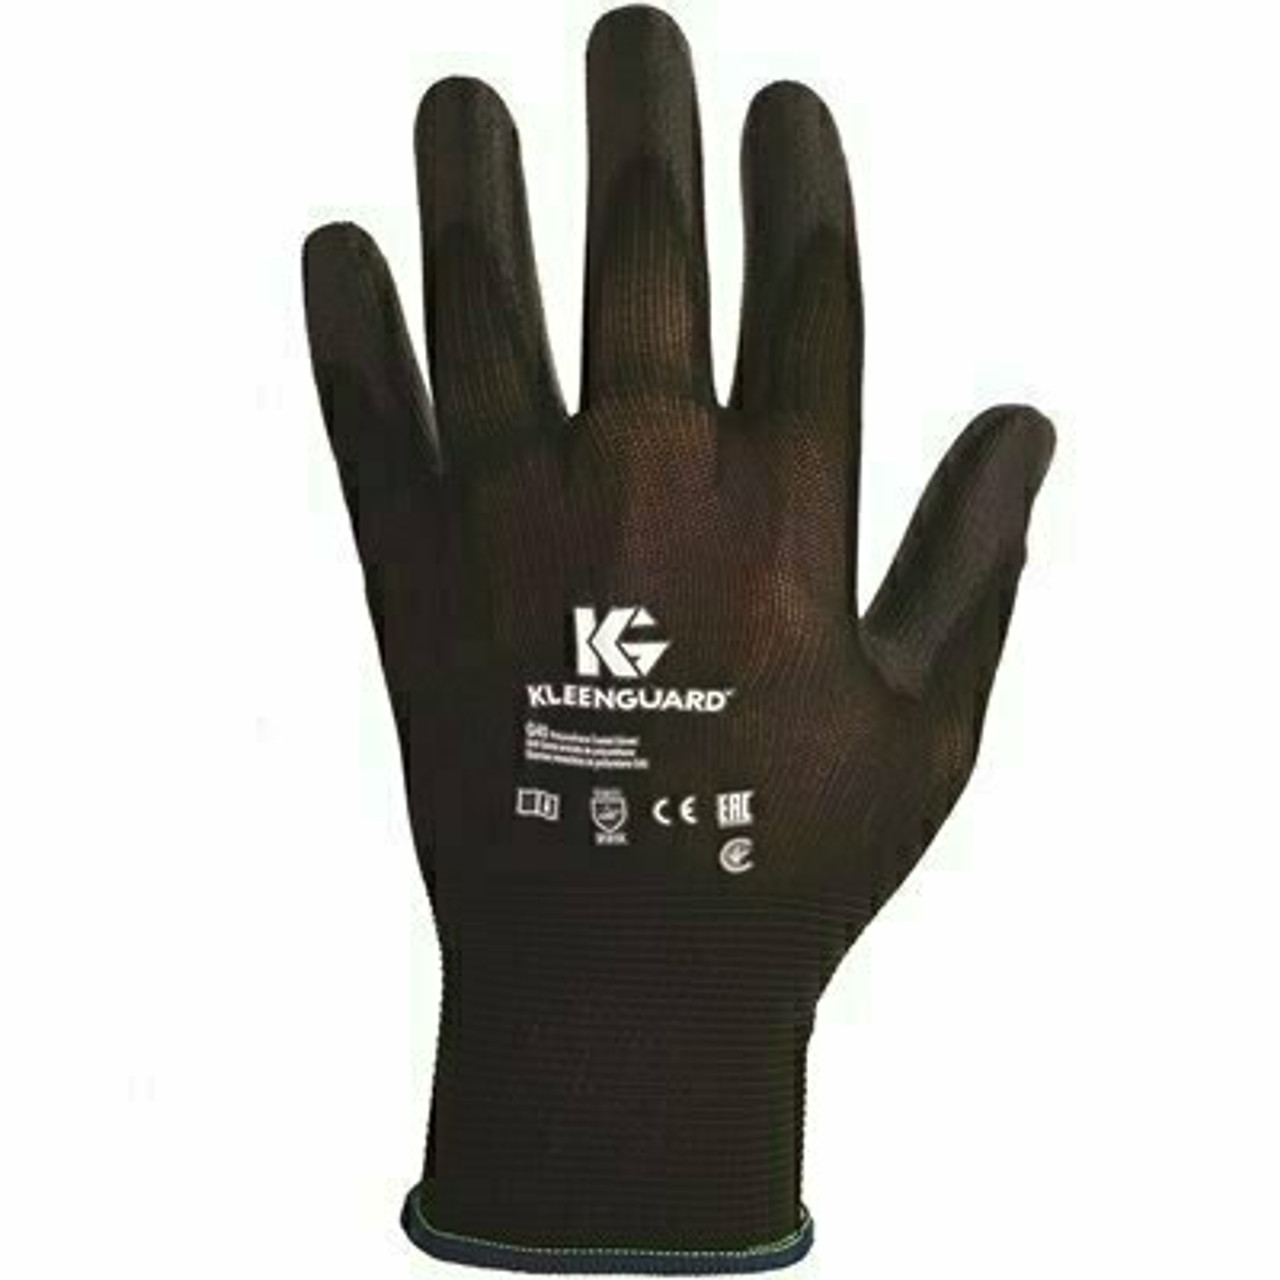 Kleenguard G40 Size 9.0 Large Black Polyurethane Coated Gloves High Dexterity (12-Pairs/Bag)